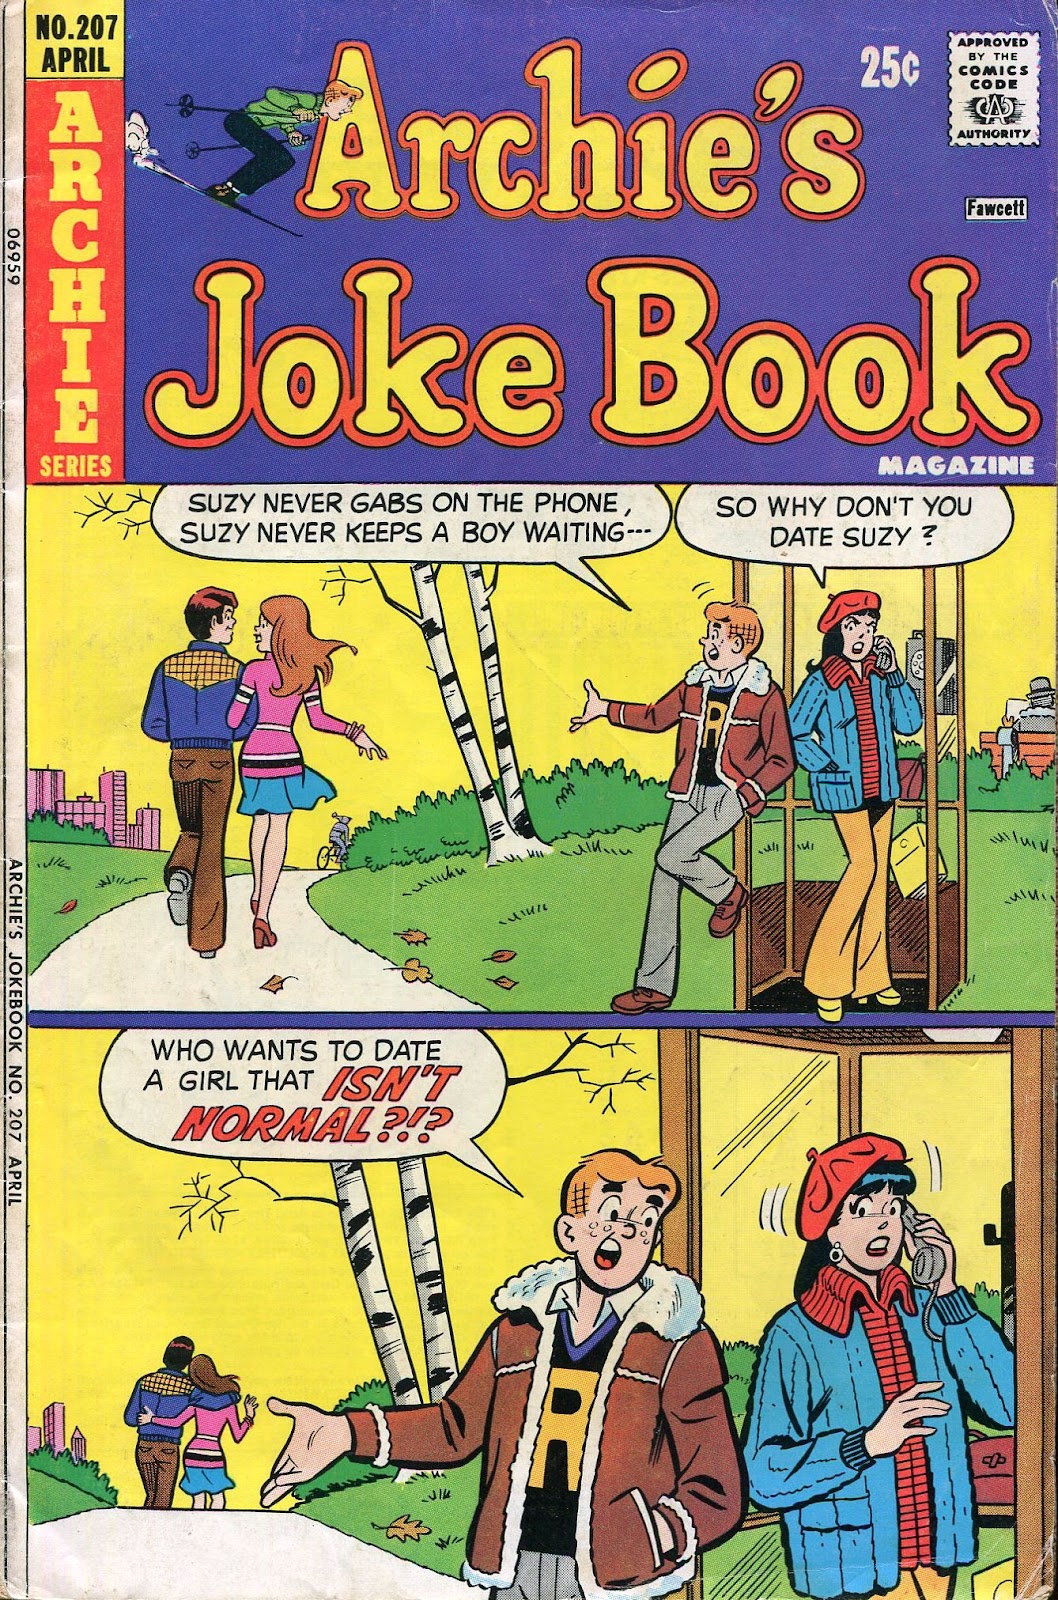 Archie's Joke Book Magazine issue 207 - Page 1